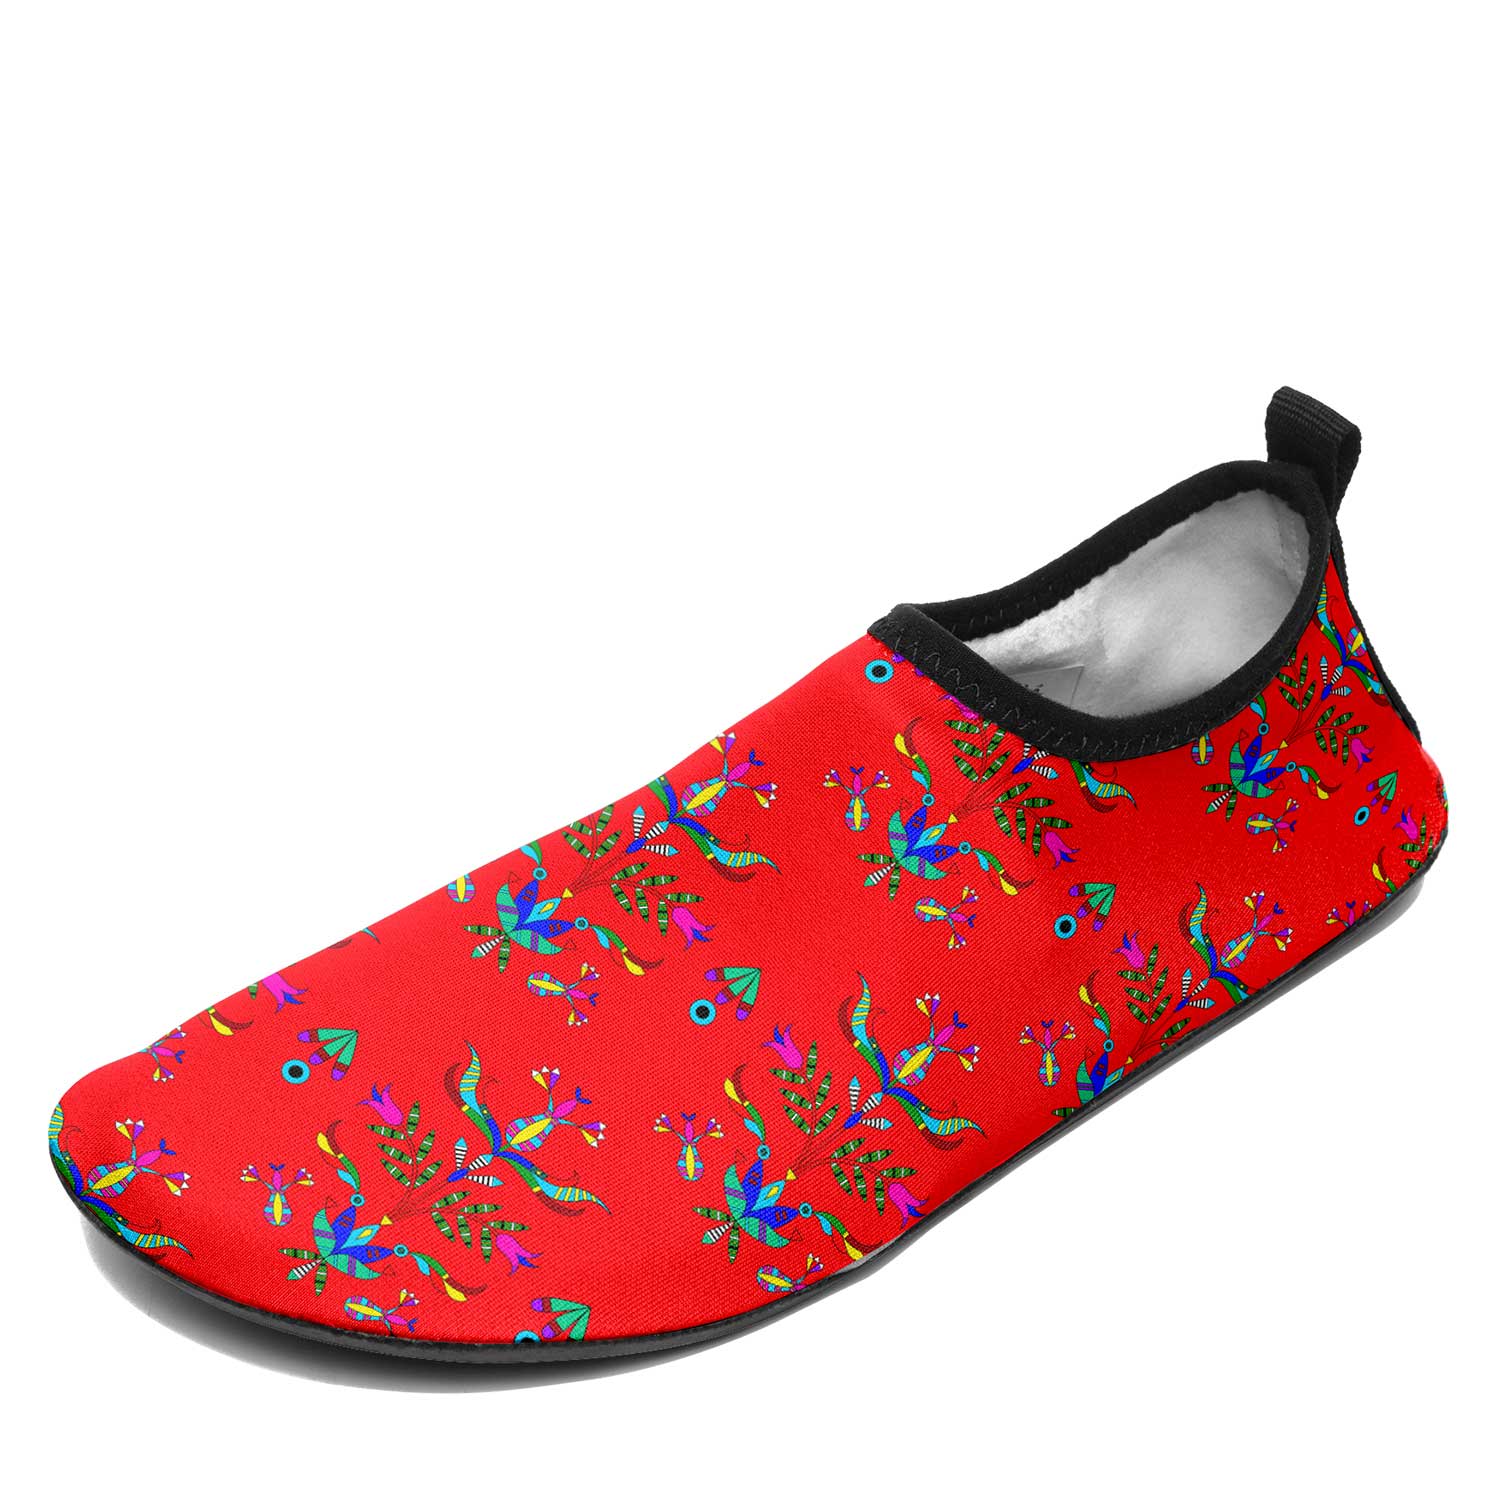 Dakota Damask Red Kid's Sockamoccs Slip On Shoes